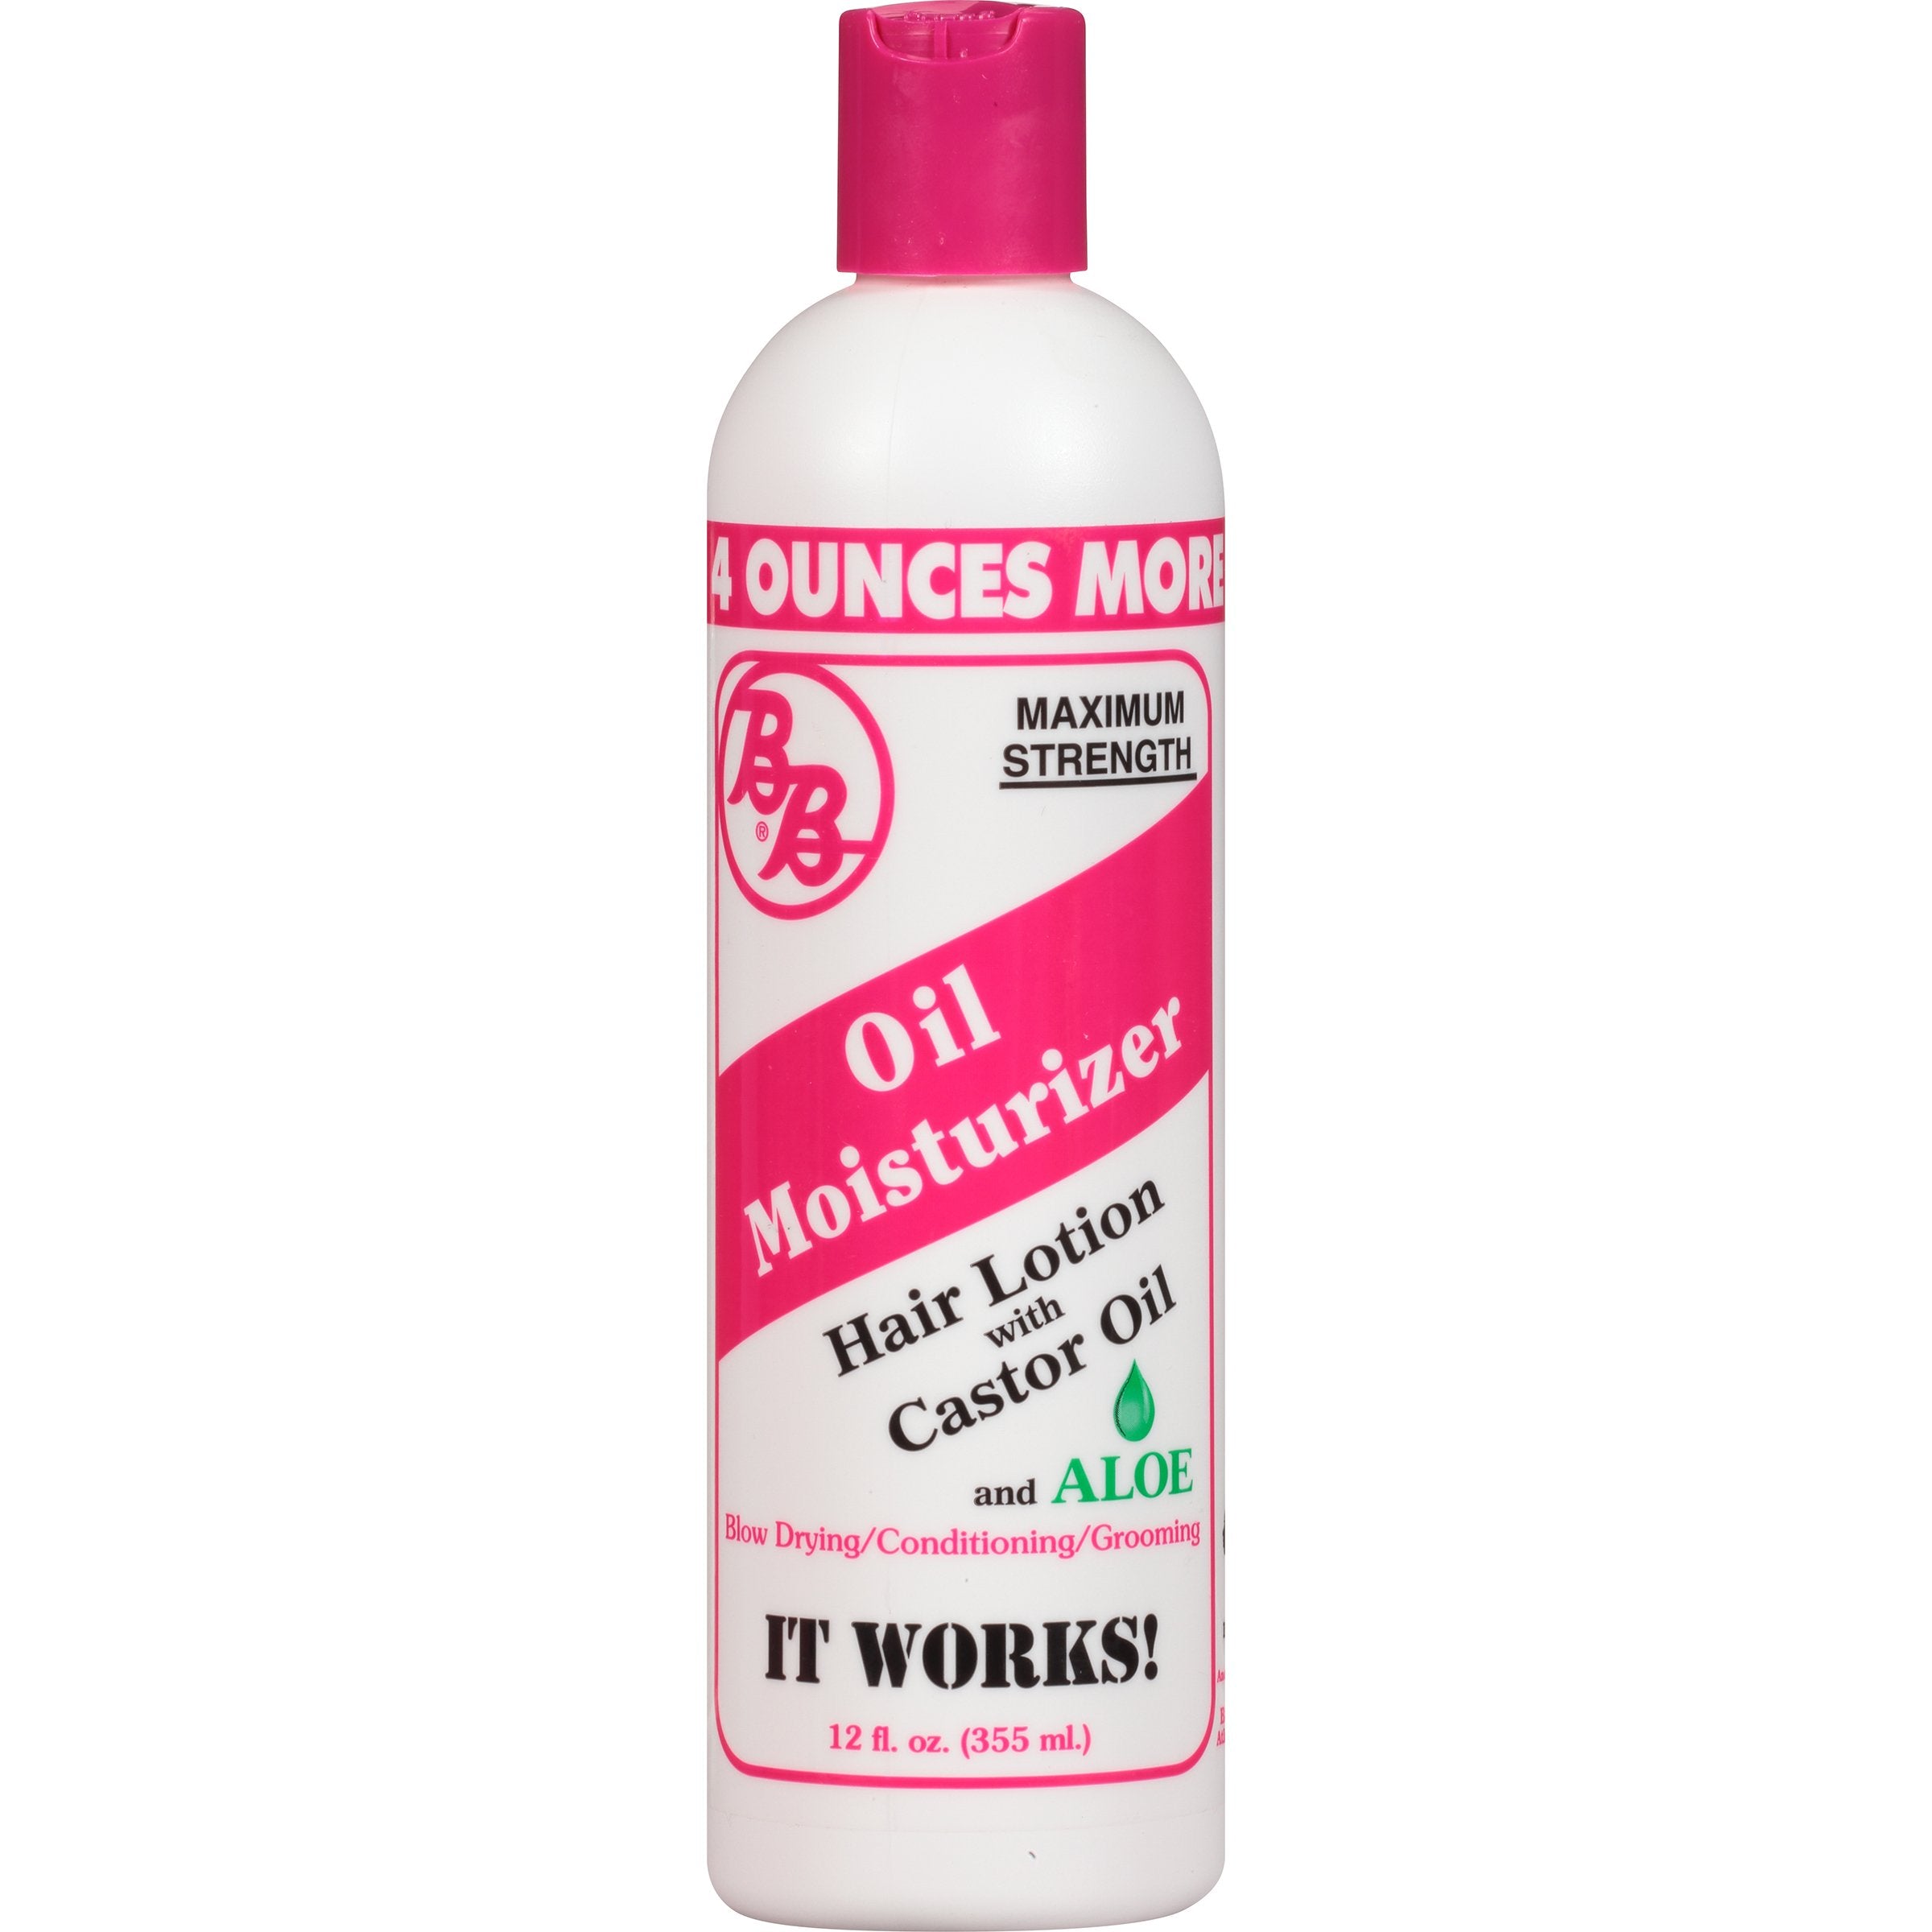 Bronner Brothers Oil moisturizer hair lotion with castor oil and aloe maximum strength 12 Oz